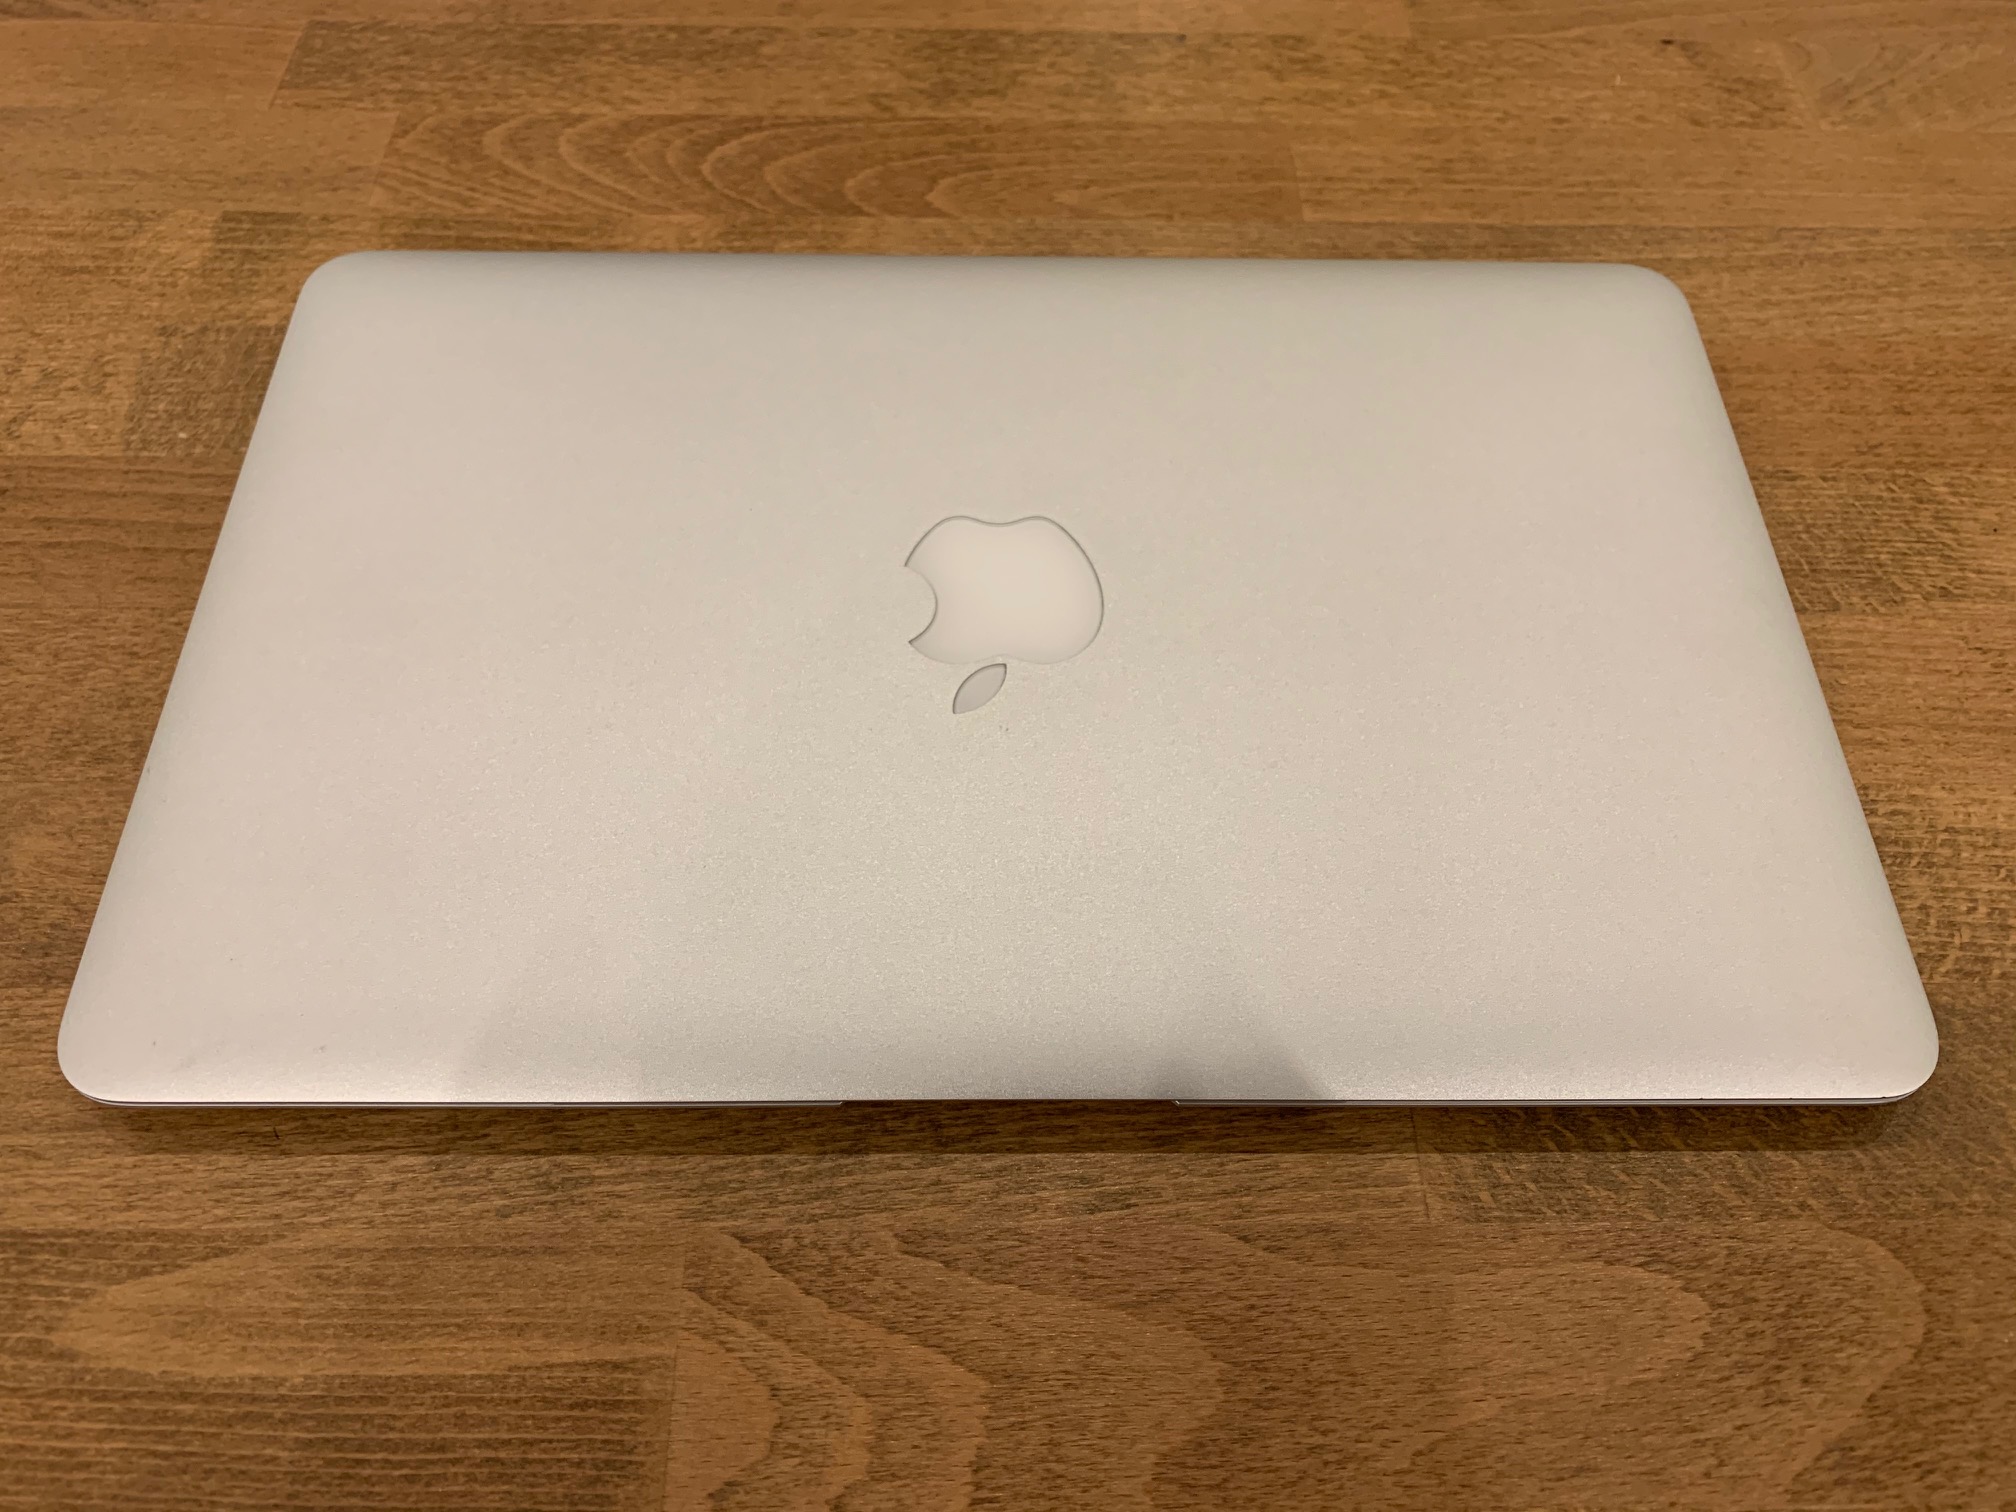 macbook 11 inch 2015